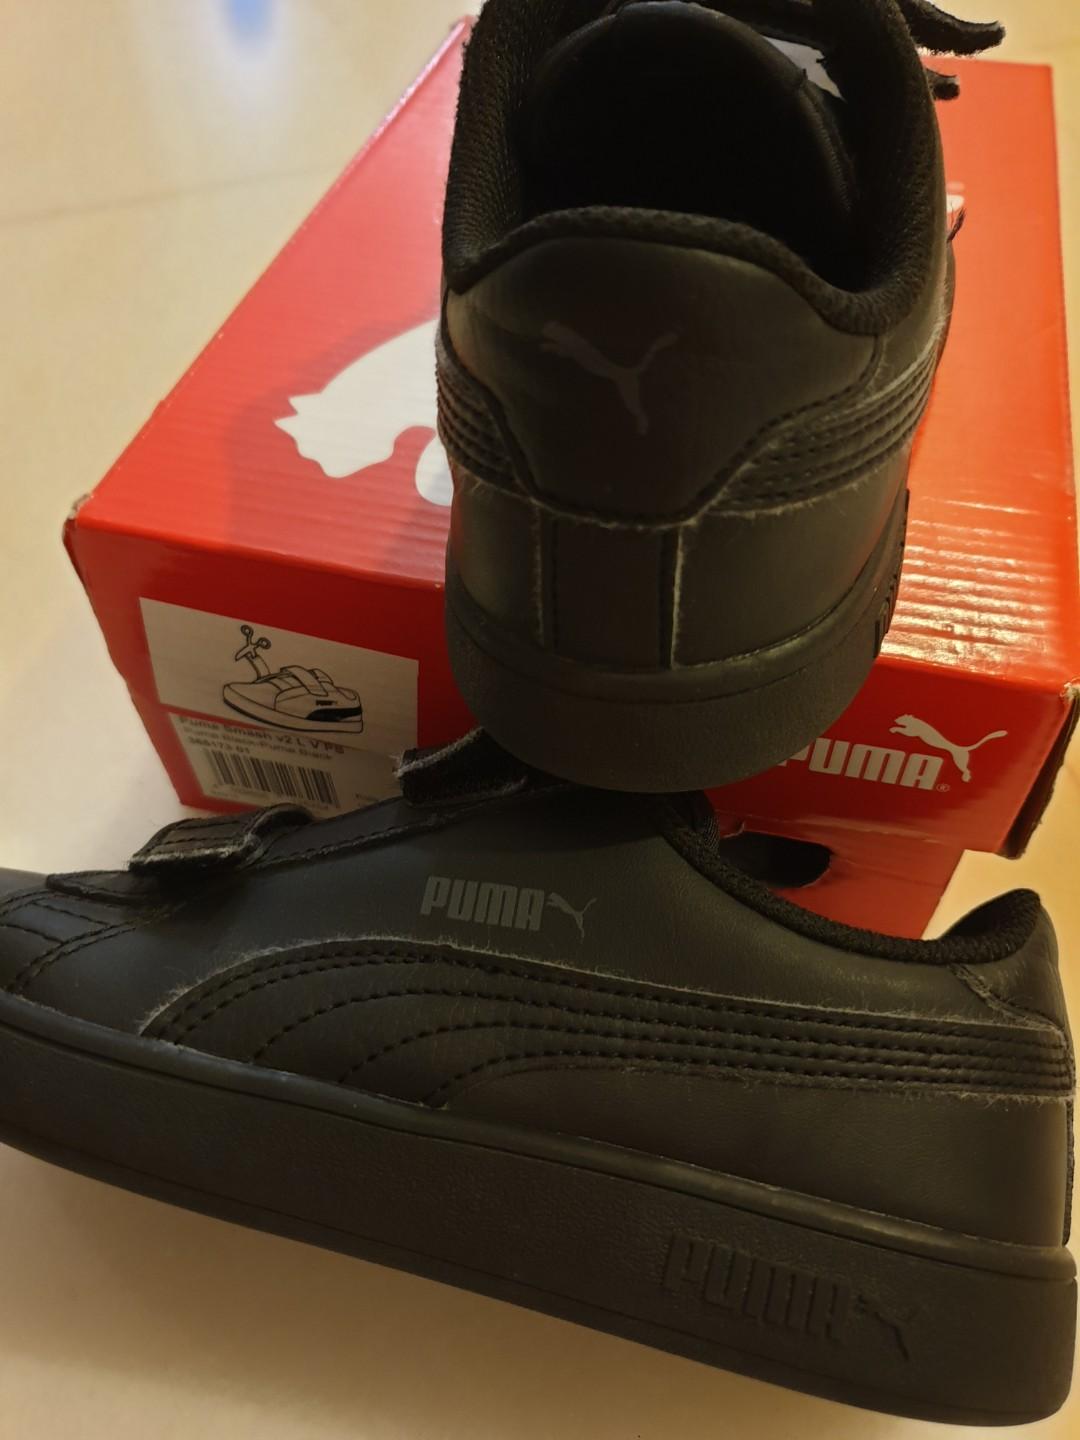 puma school shoes black